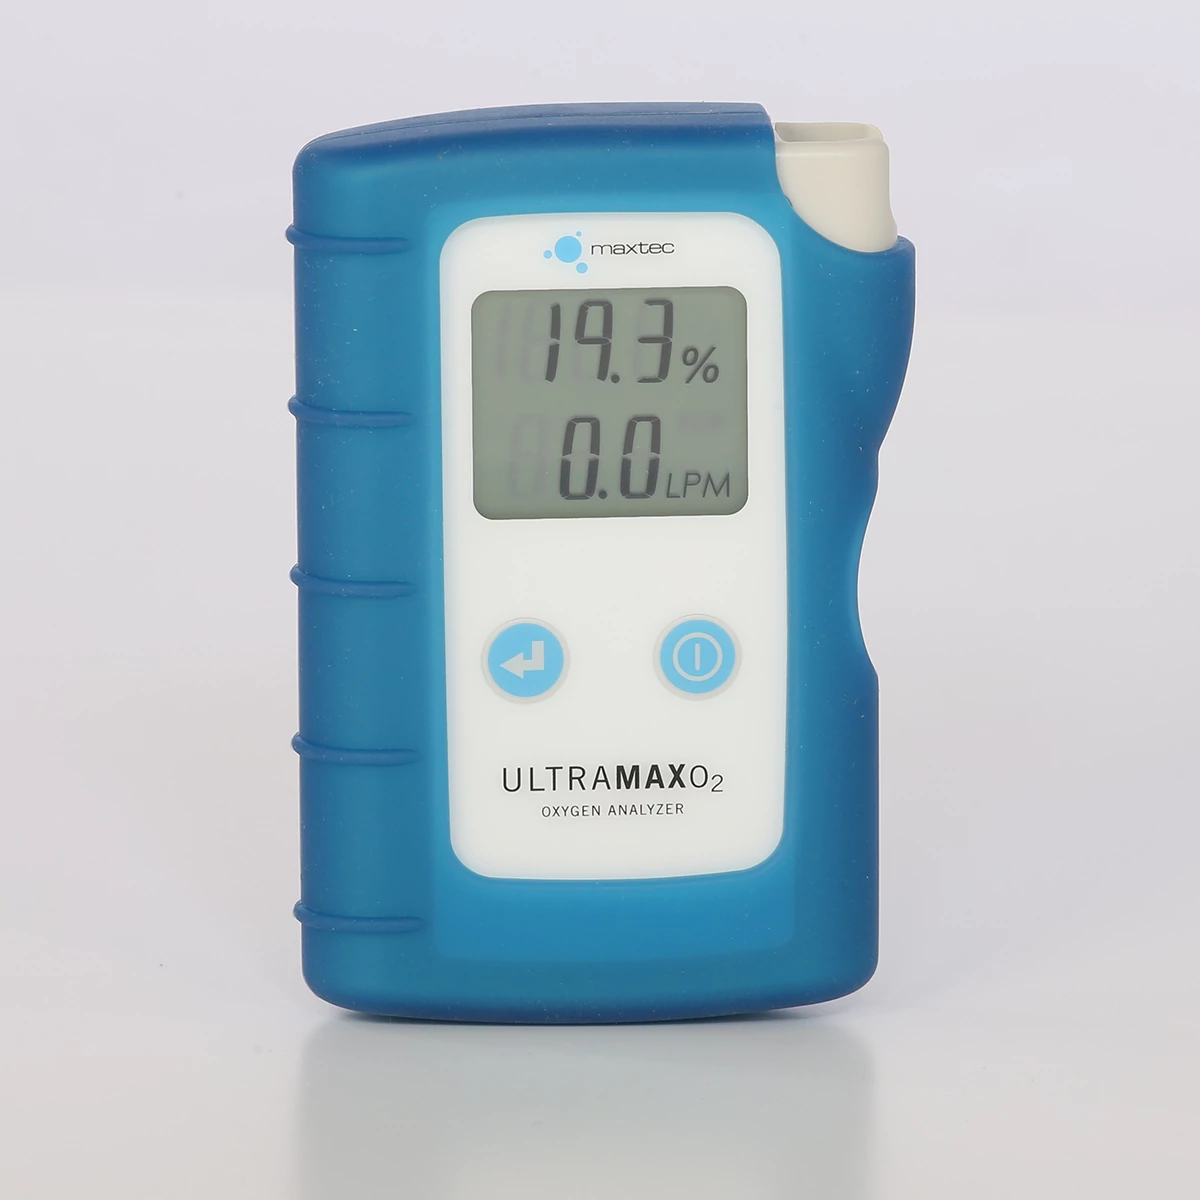 Ultramax O2 Oxygen concentration and volume sensor.